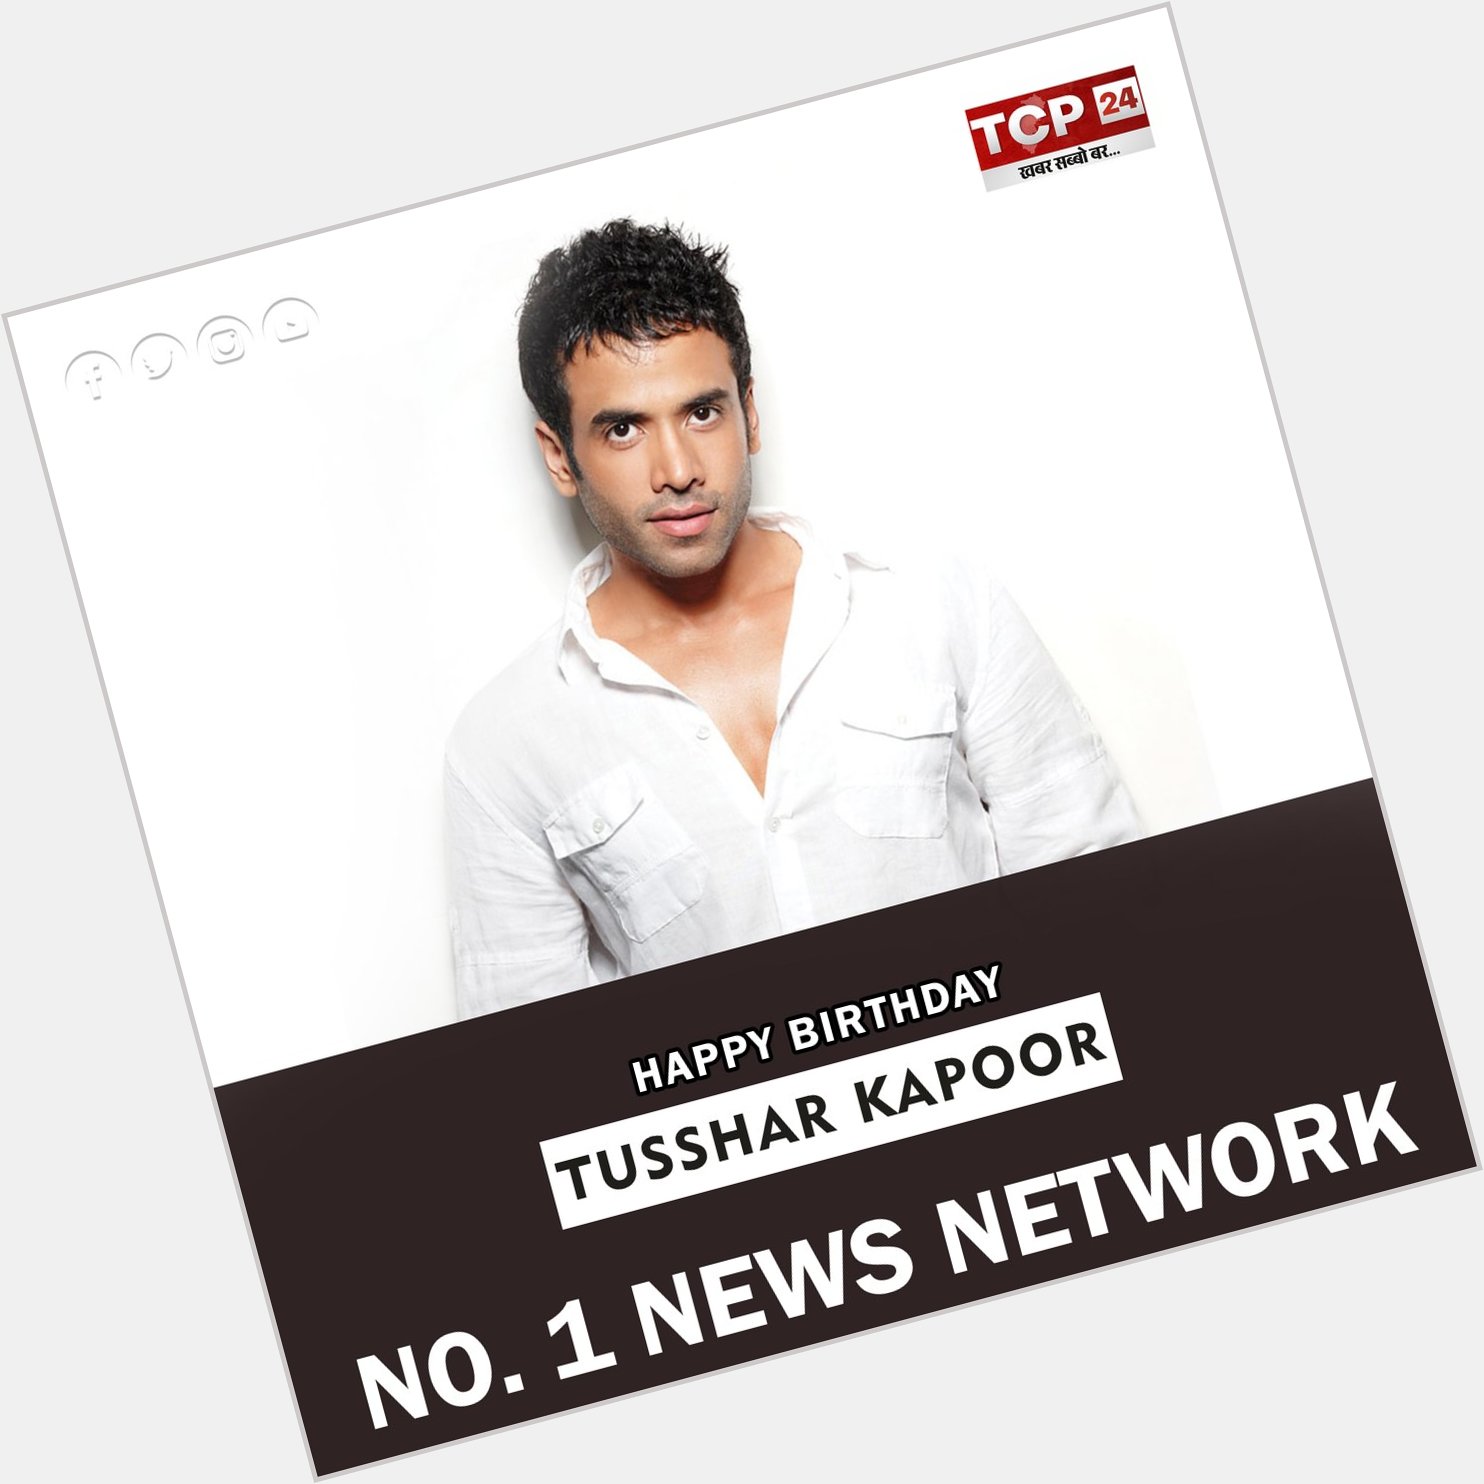 Happy Birthday Tusshar Kapoor 
.
.
.      